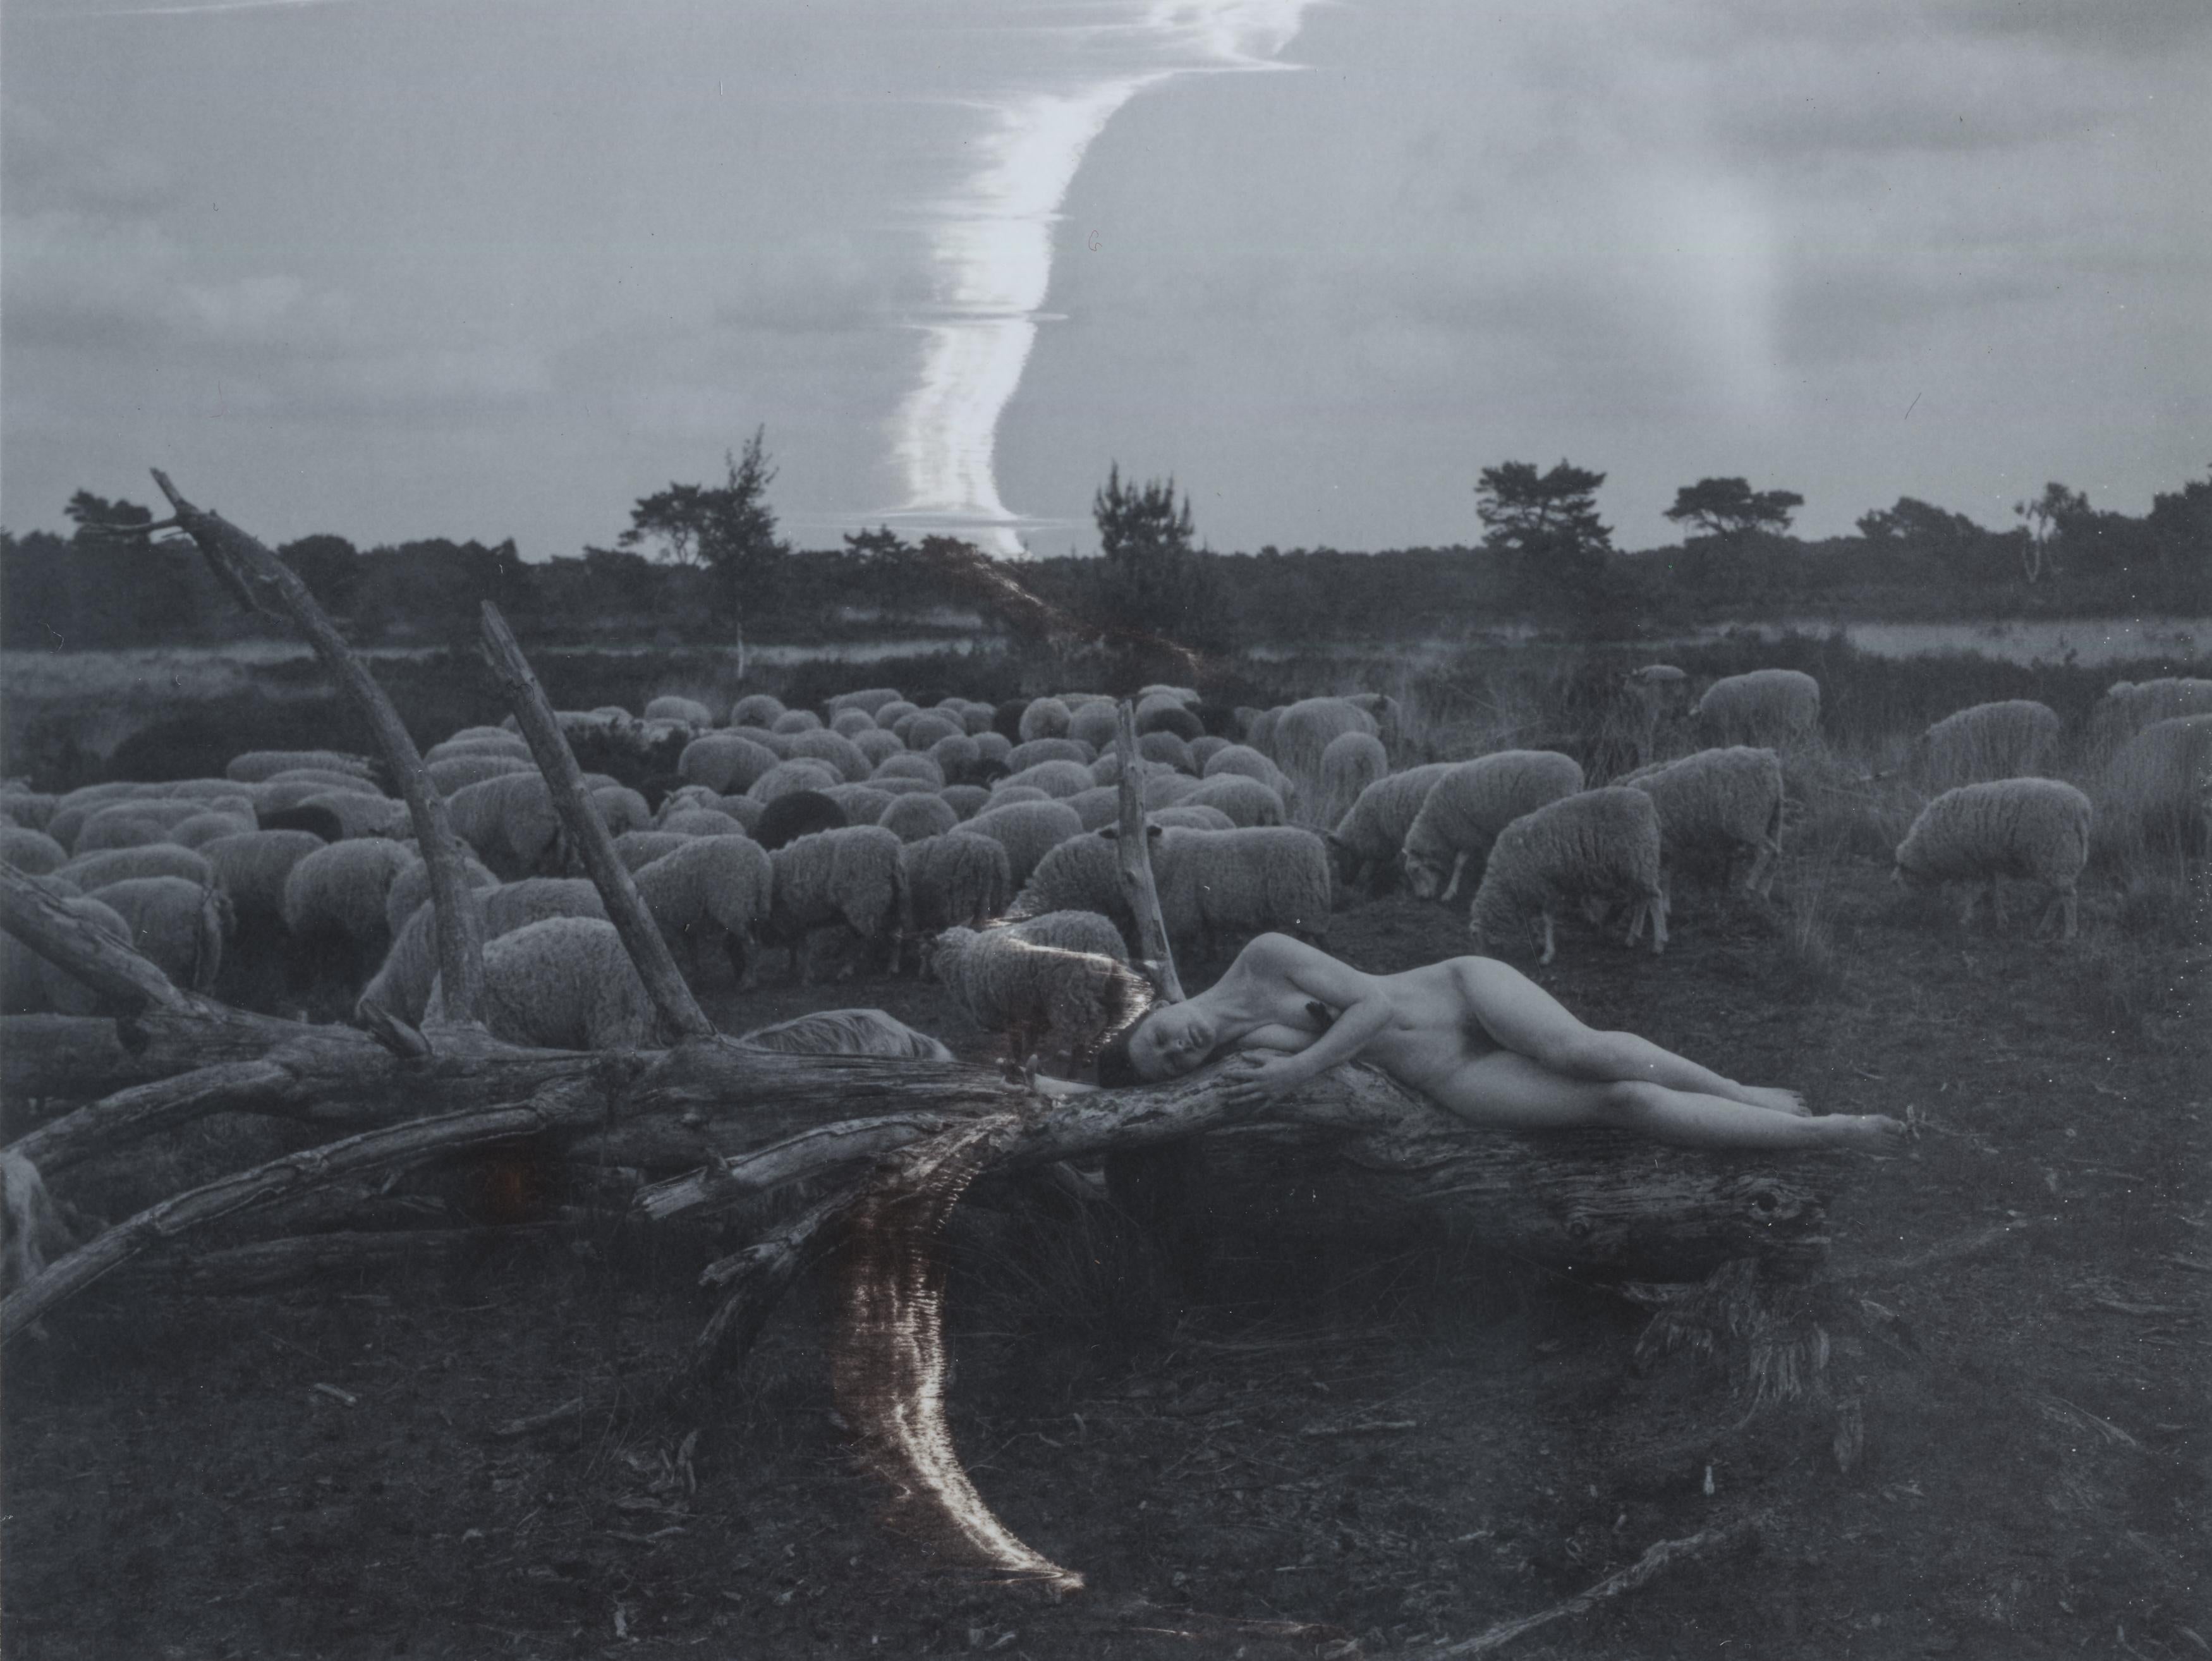 Kirsten Thys van den Audenaerde Nude Photograph - Sonnet - Contemporary, Nude, Women, Polaroid, 21st Century